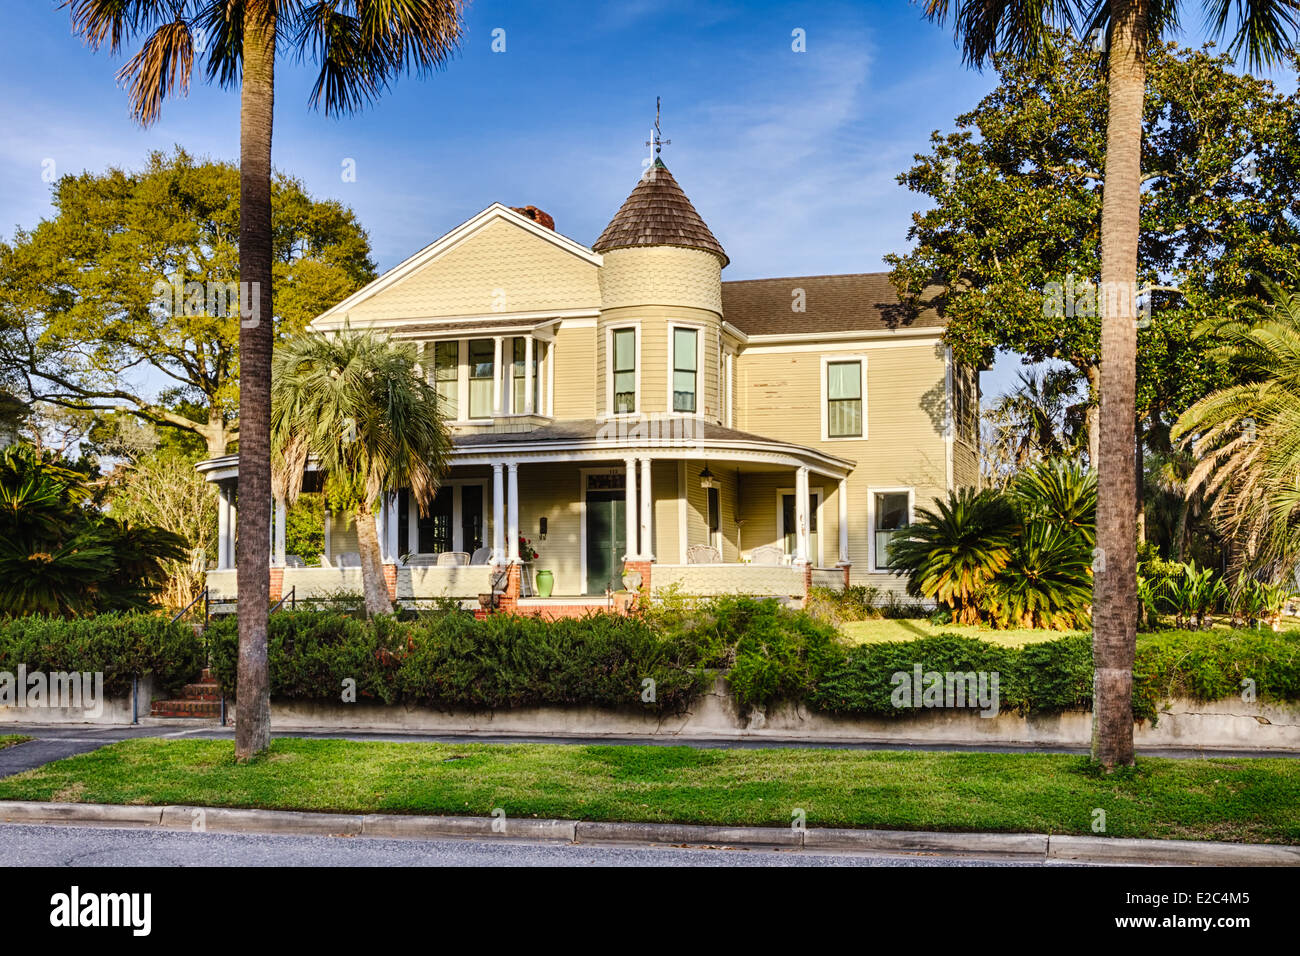 La Baker House, vers 1859, Fernandina Beach, Floride (HDR) Banque D'Images